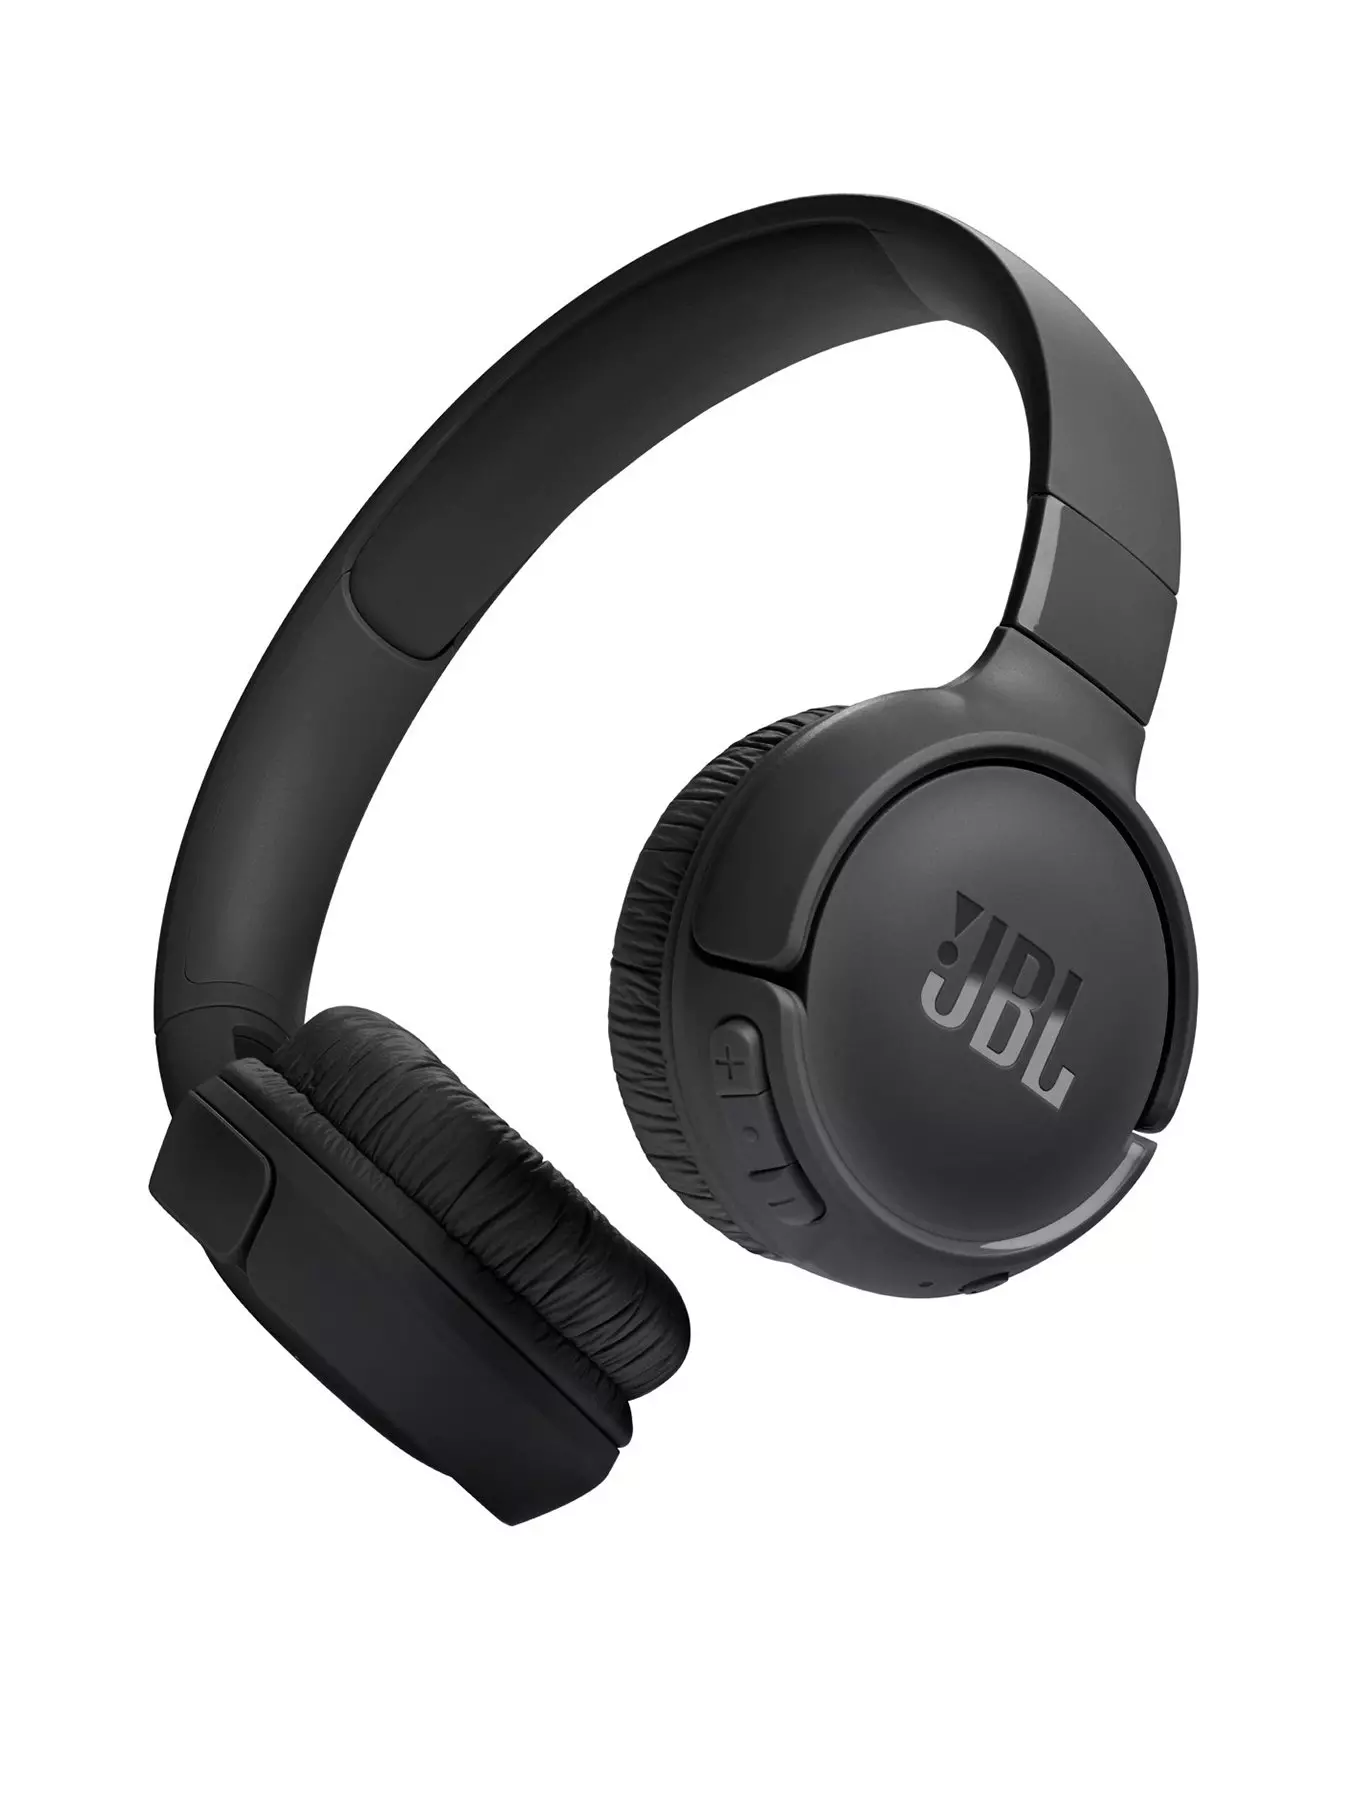 Bluetooth Headphones - Buy Bluetooth Headphones Online Starting at Just  ₹148